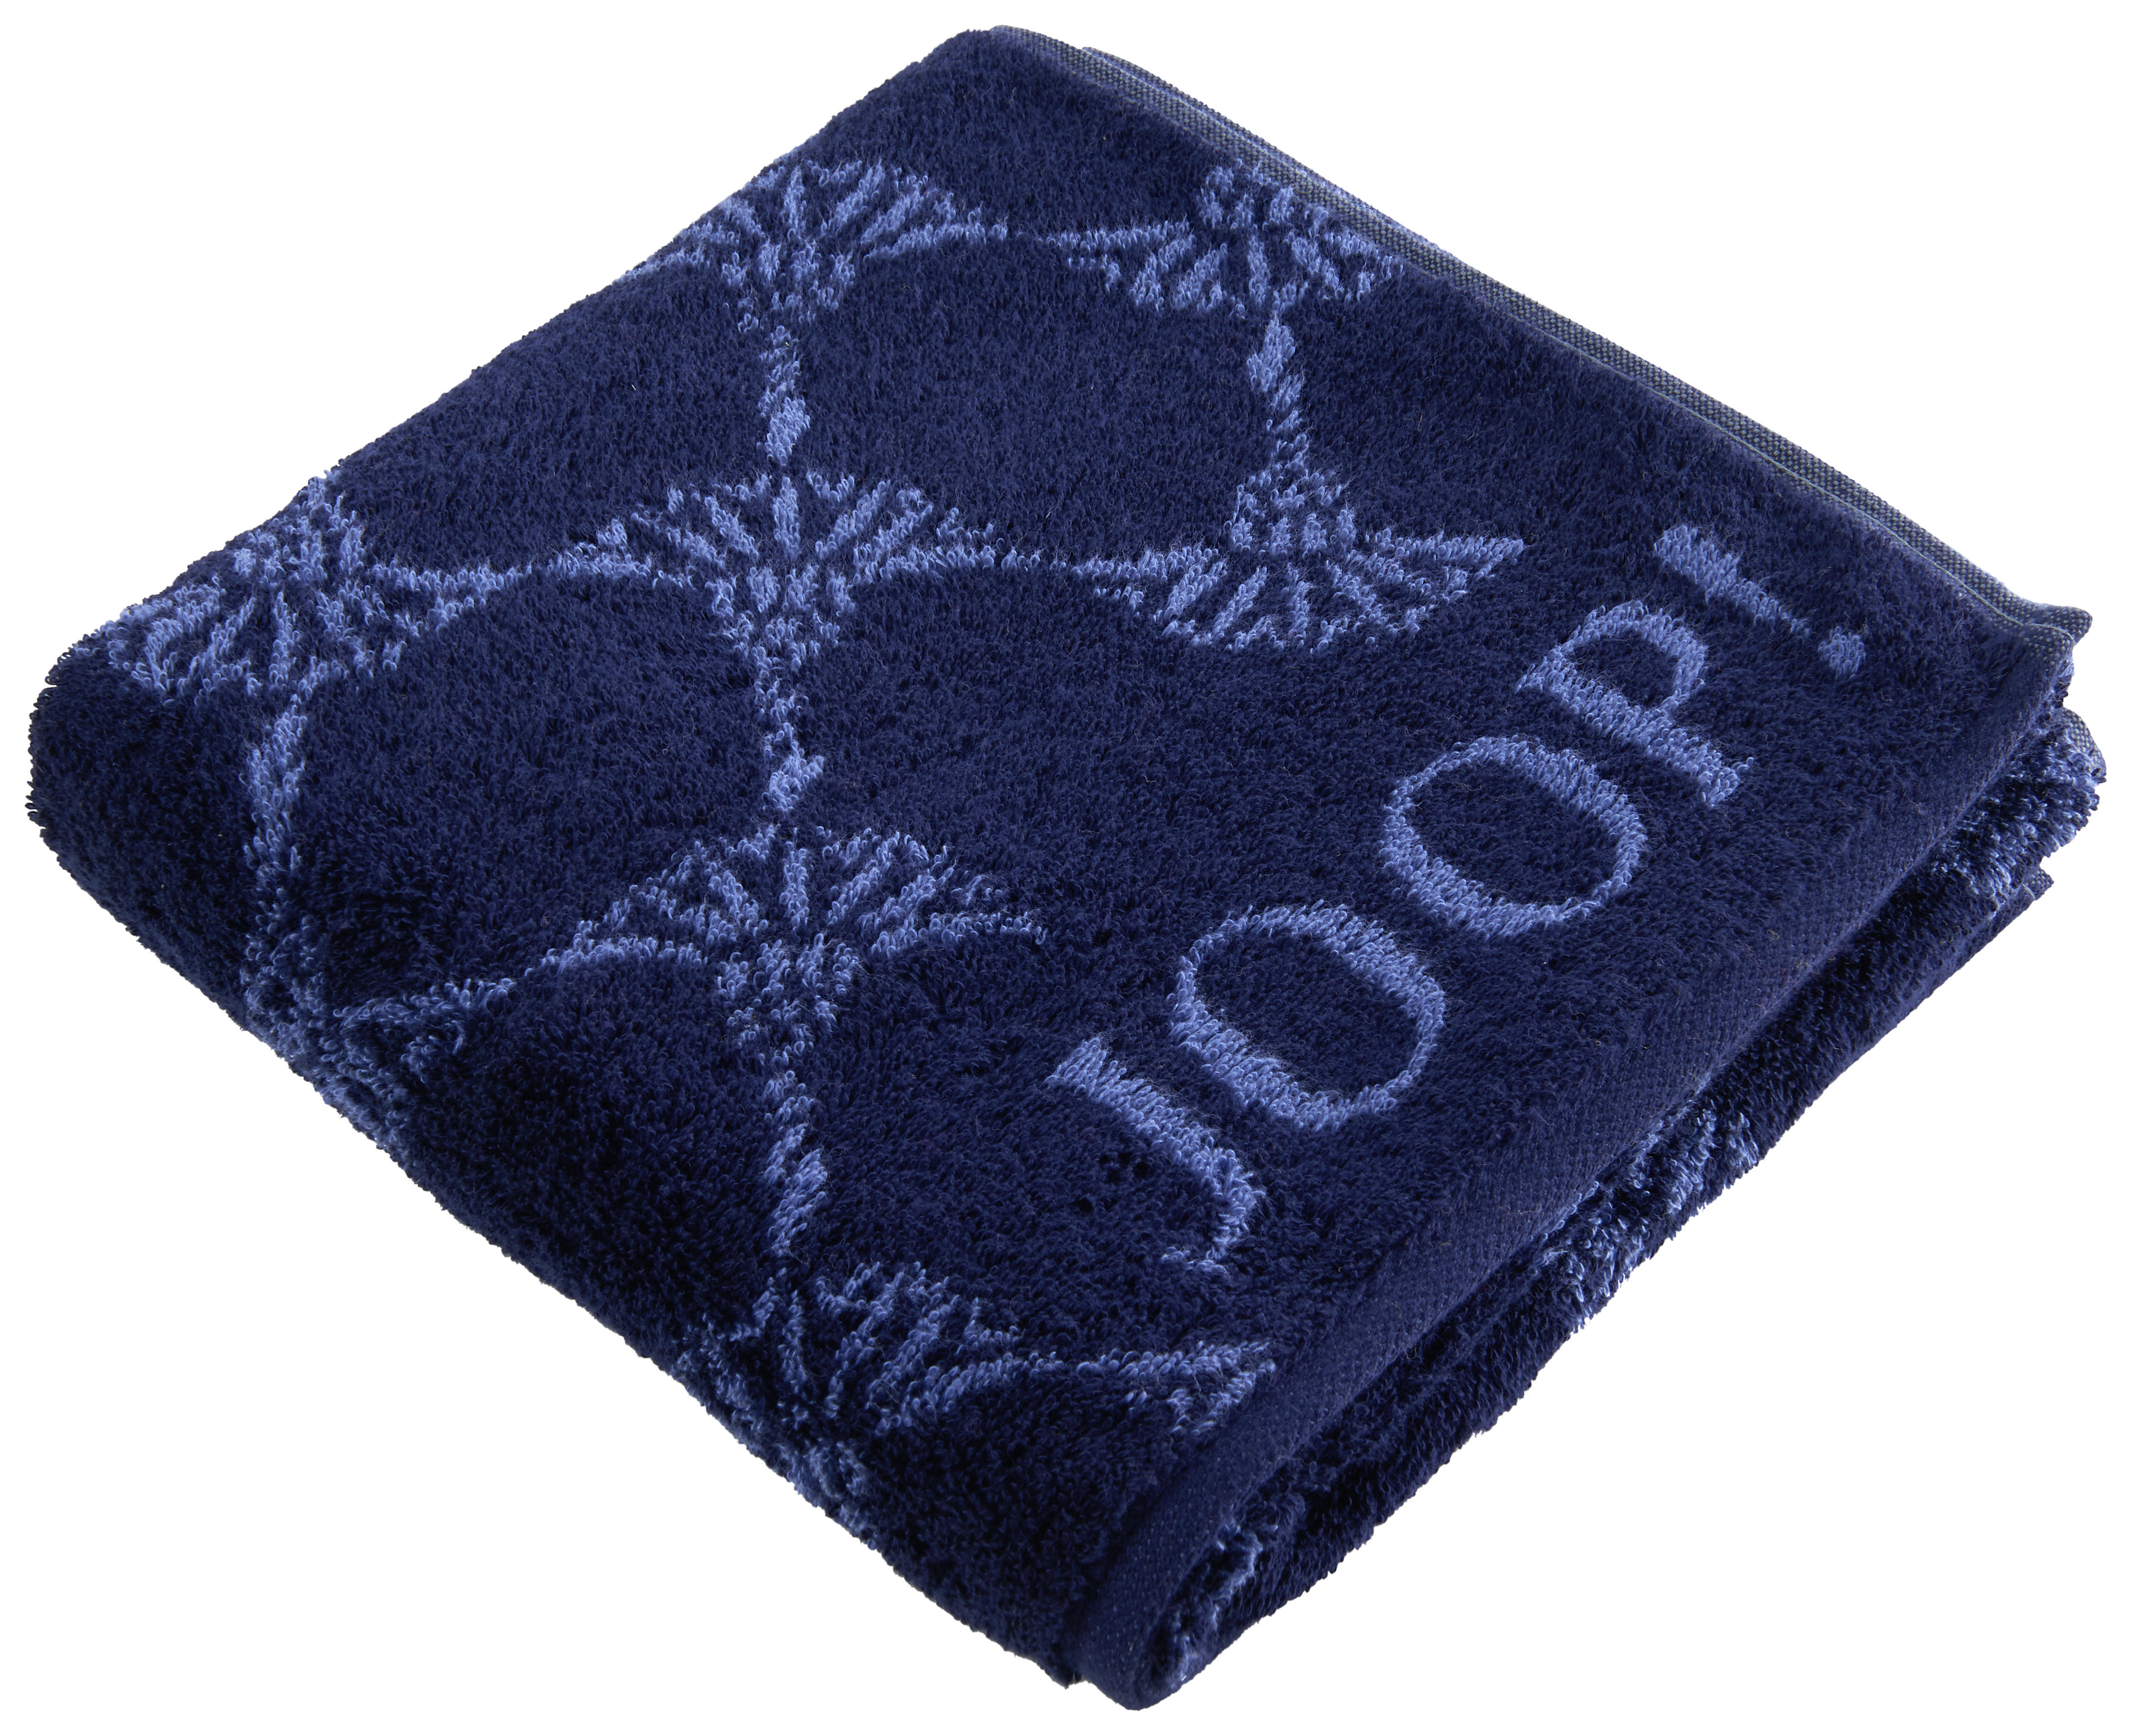 HANDTUCH Classic Cornflower 50/100 cm  - Blau/Dunkelblau, Design, Textil (50/100cm) - Joop!